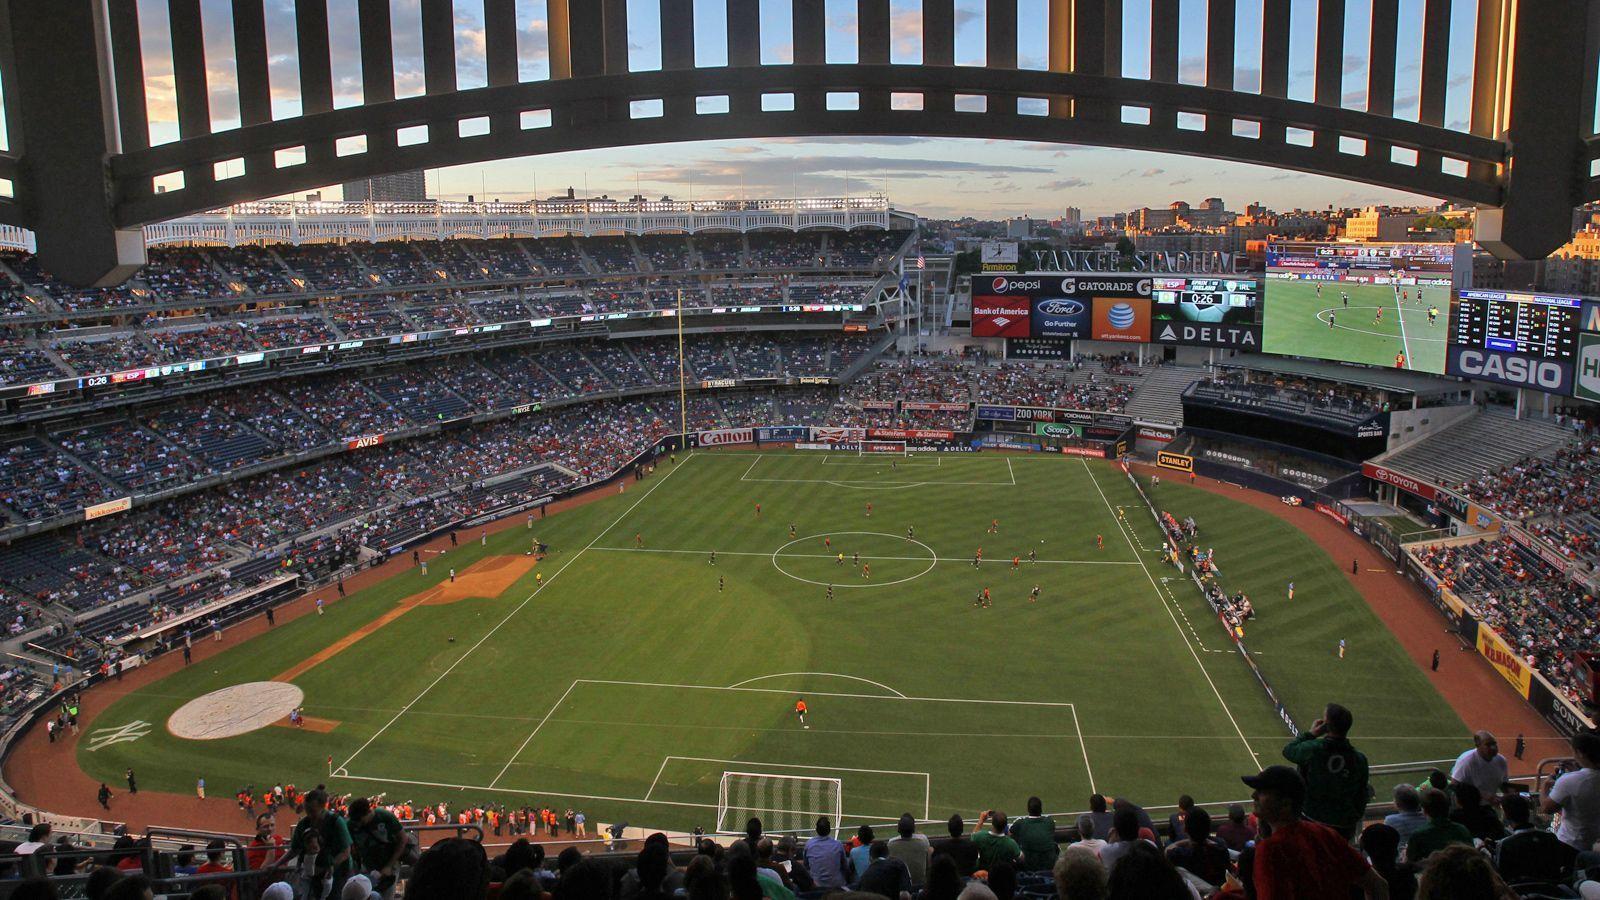 Yankees Stadium Soccer